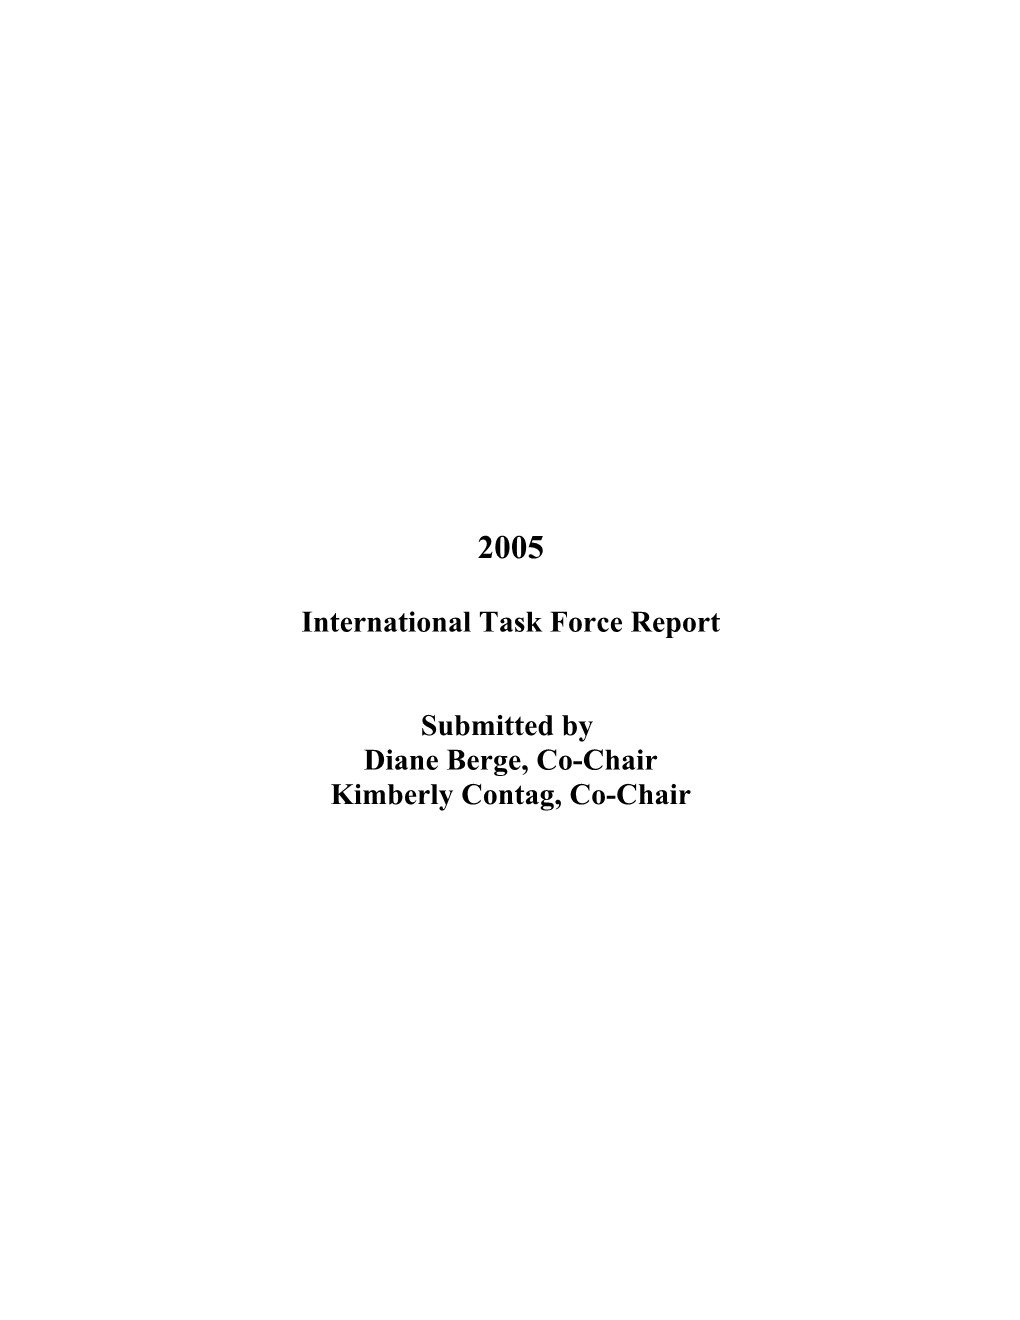 International Task Force Report